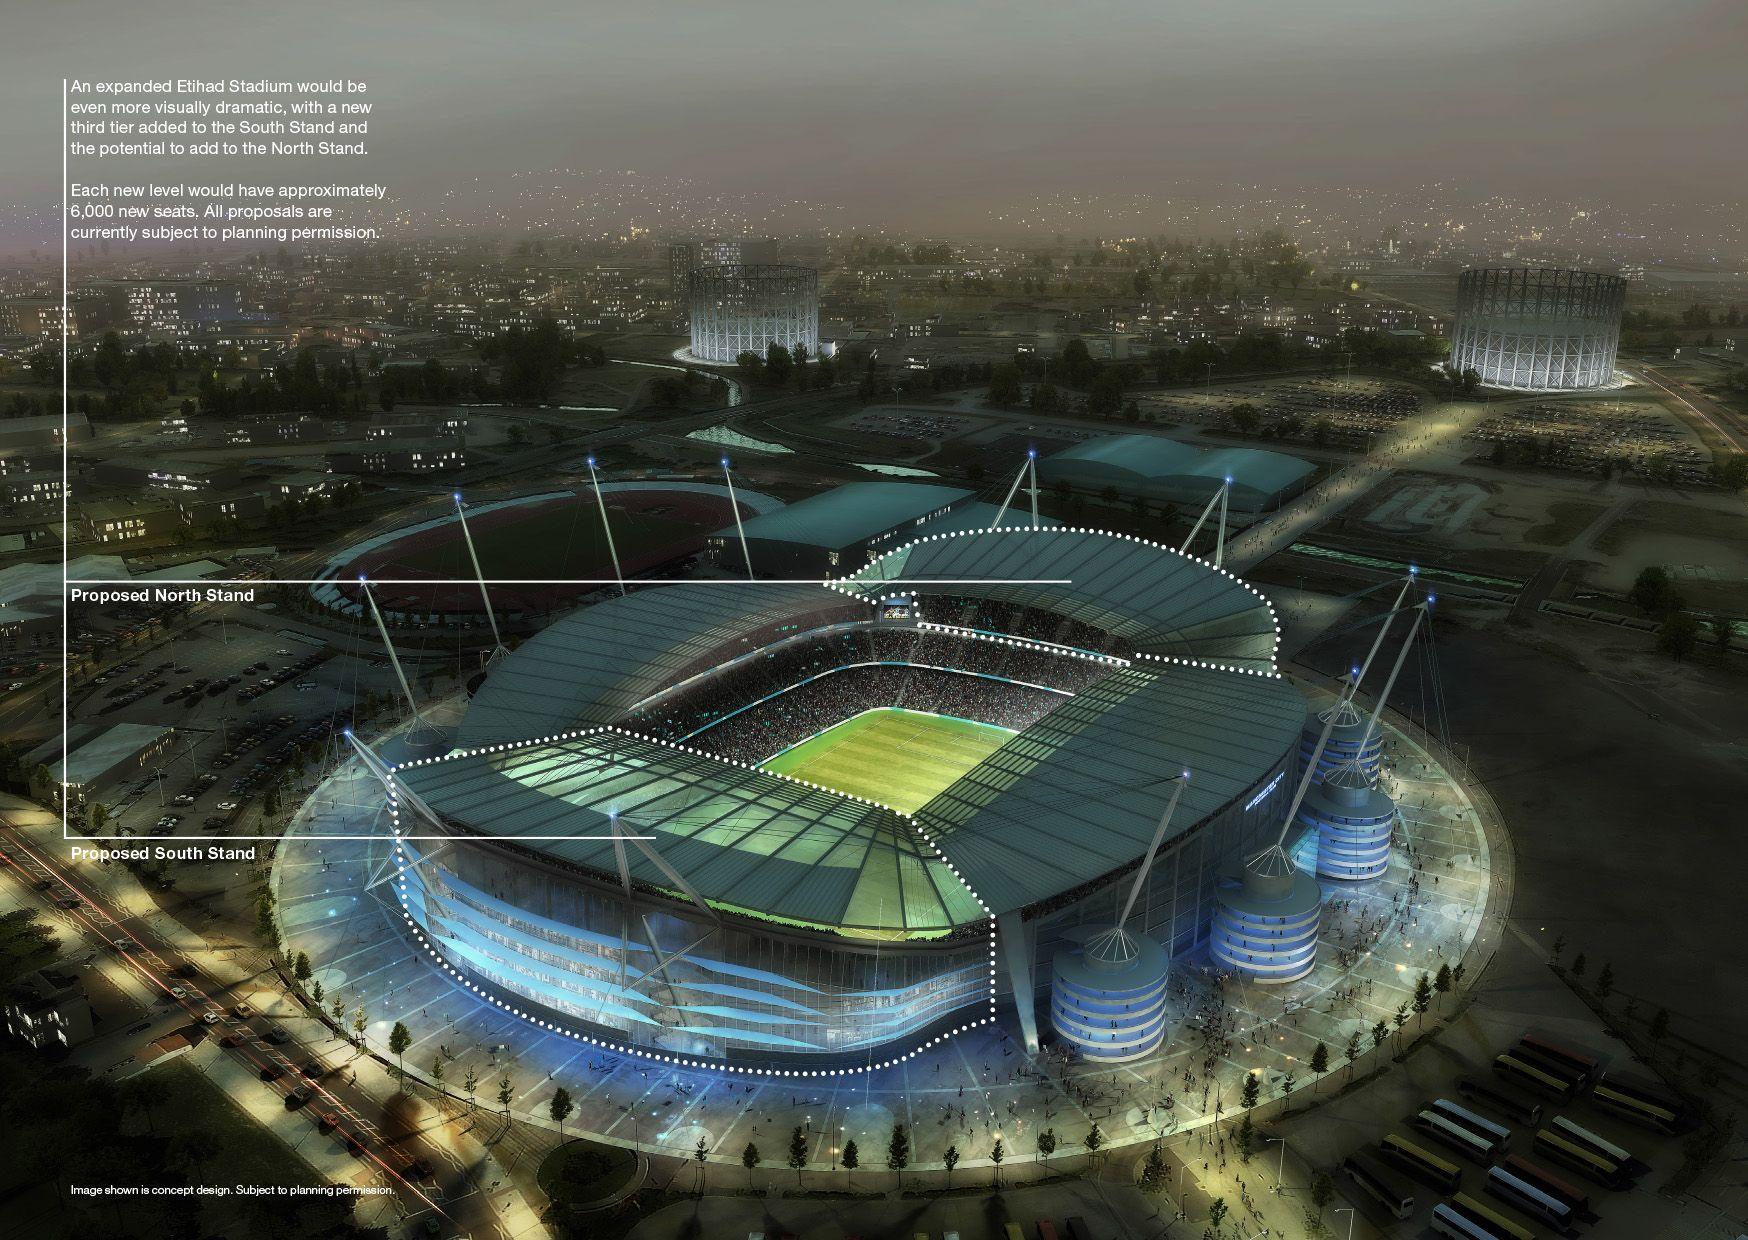 Etihad Stadium Expansion image information